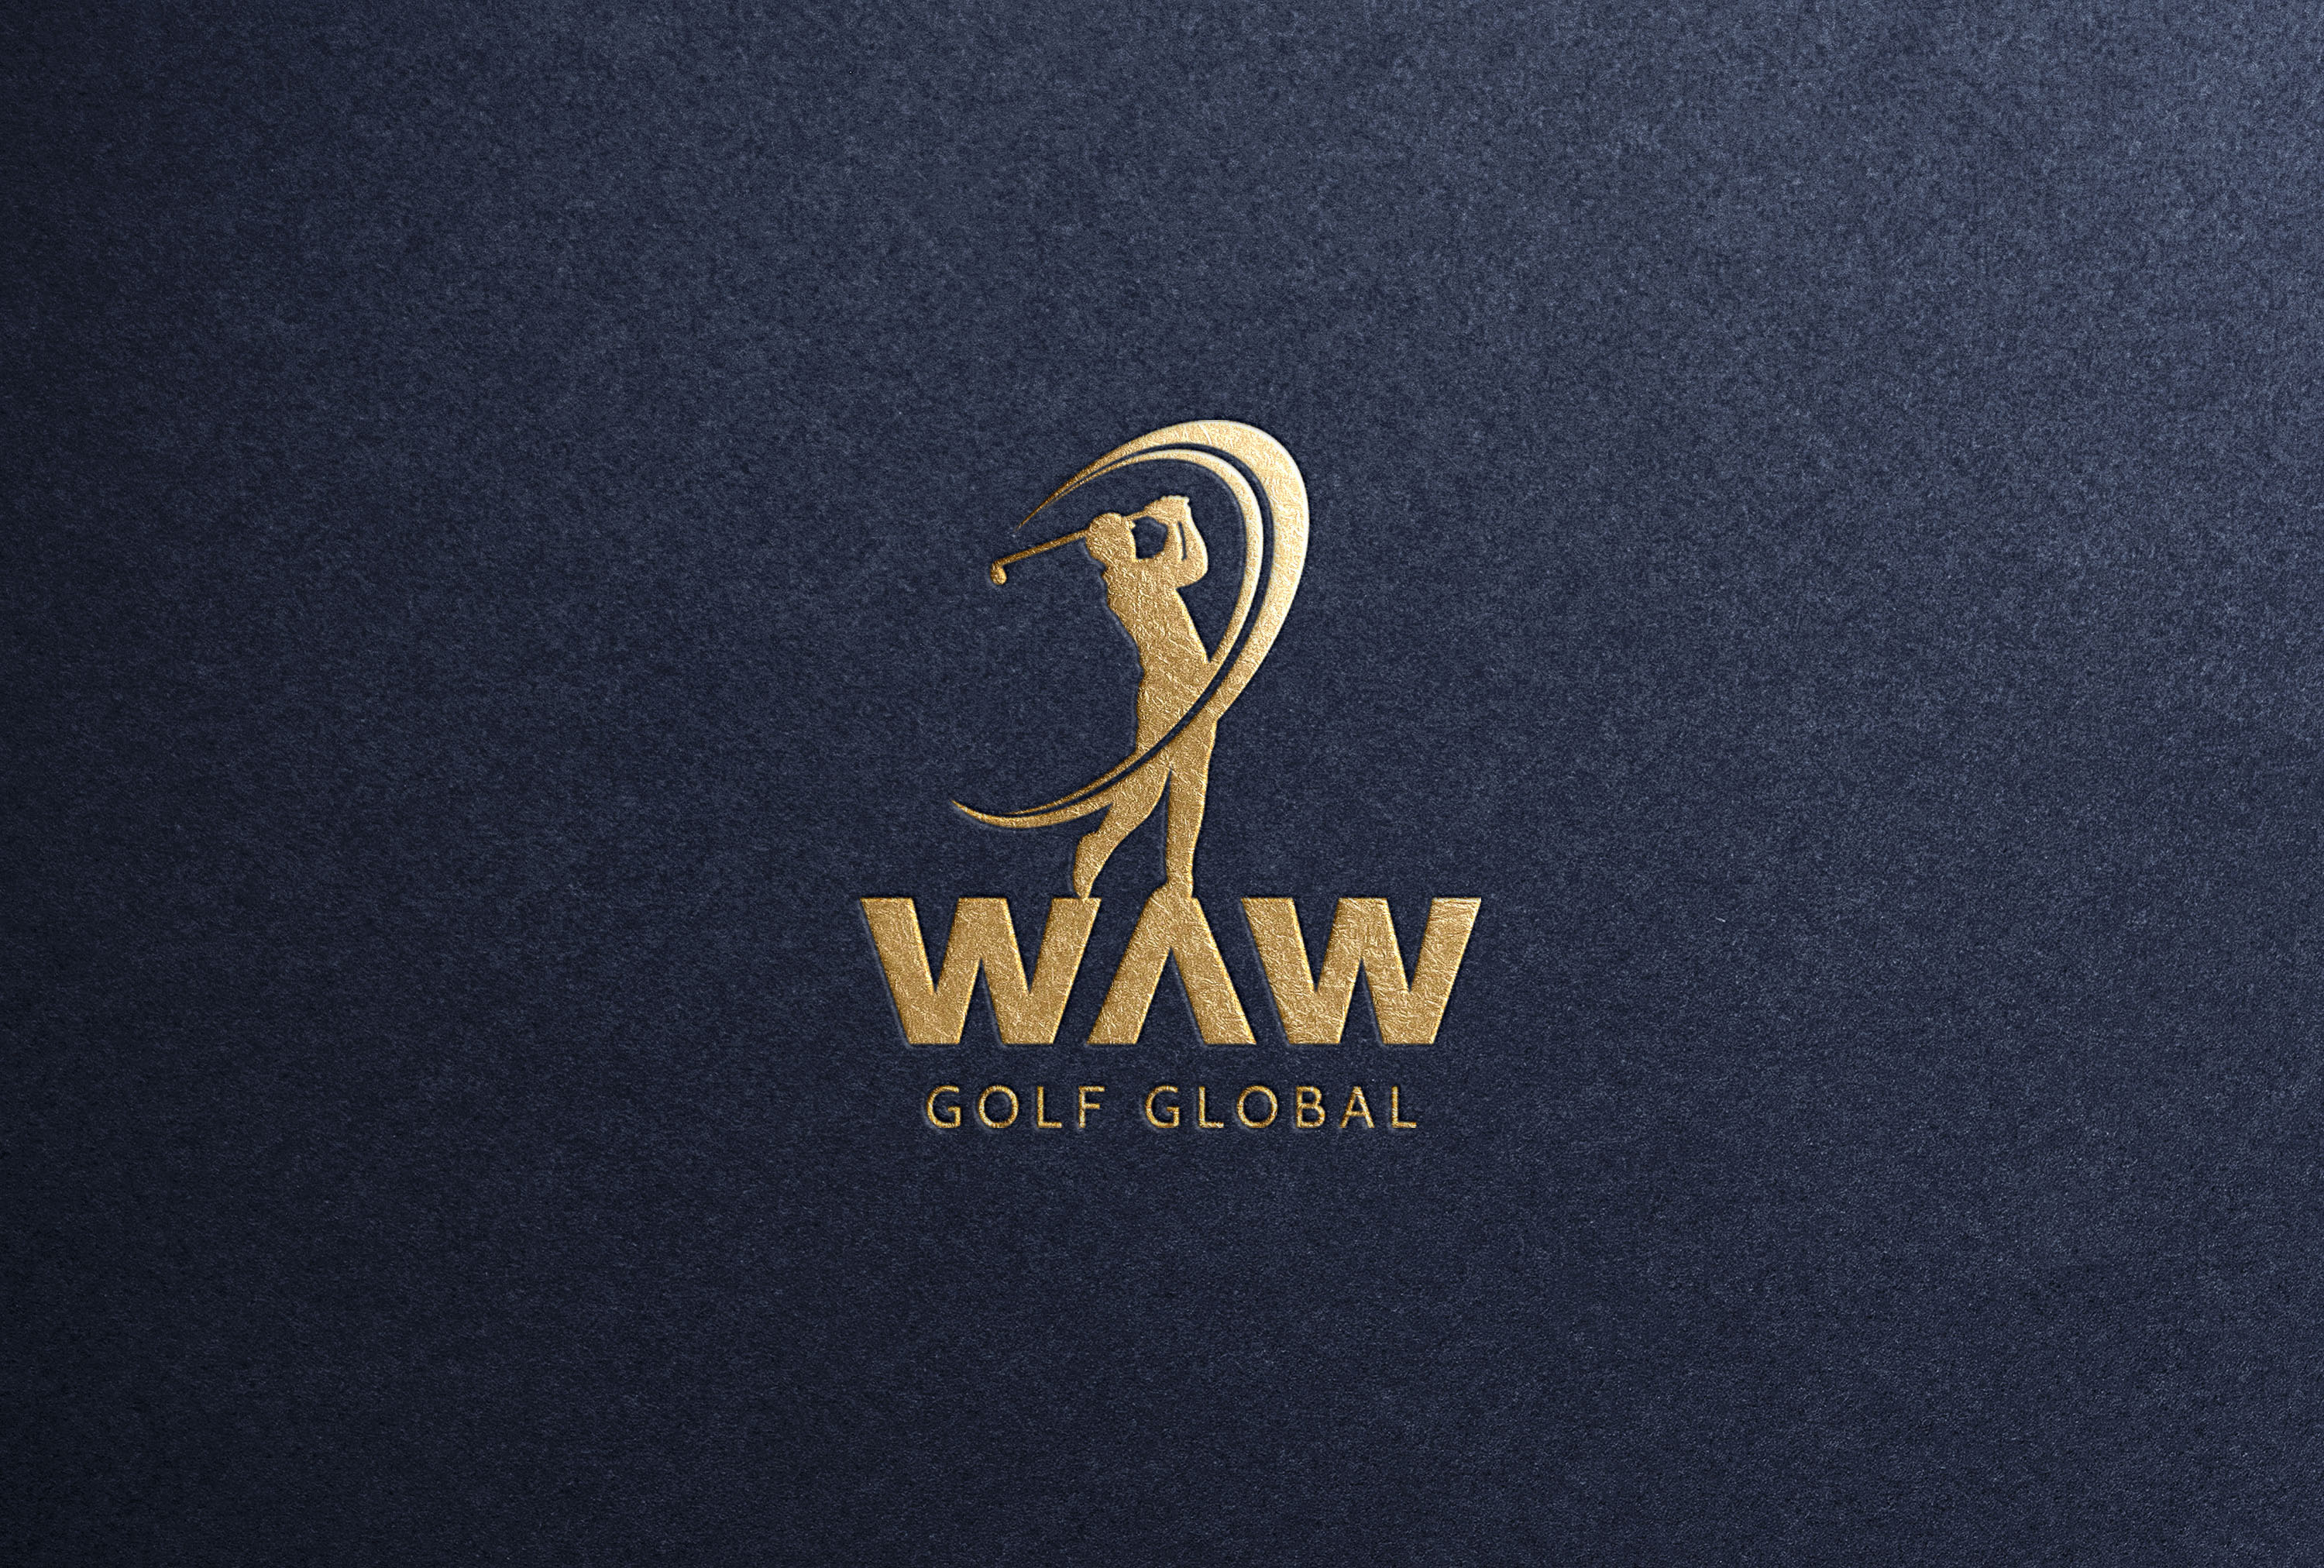 Thiết kế logo thời trang WAW Golf Global